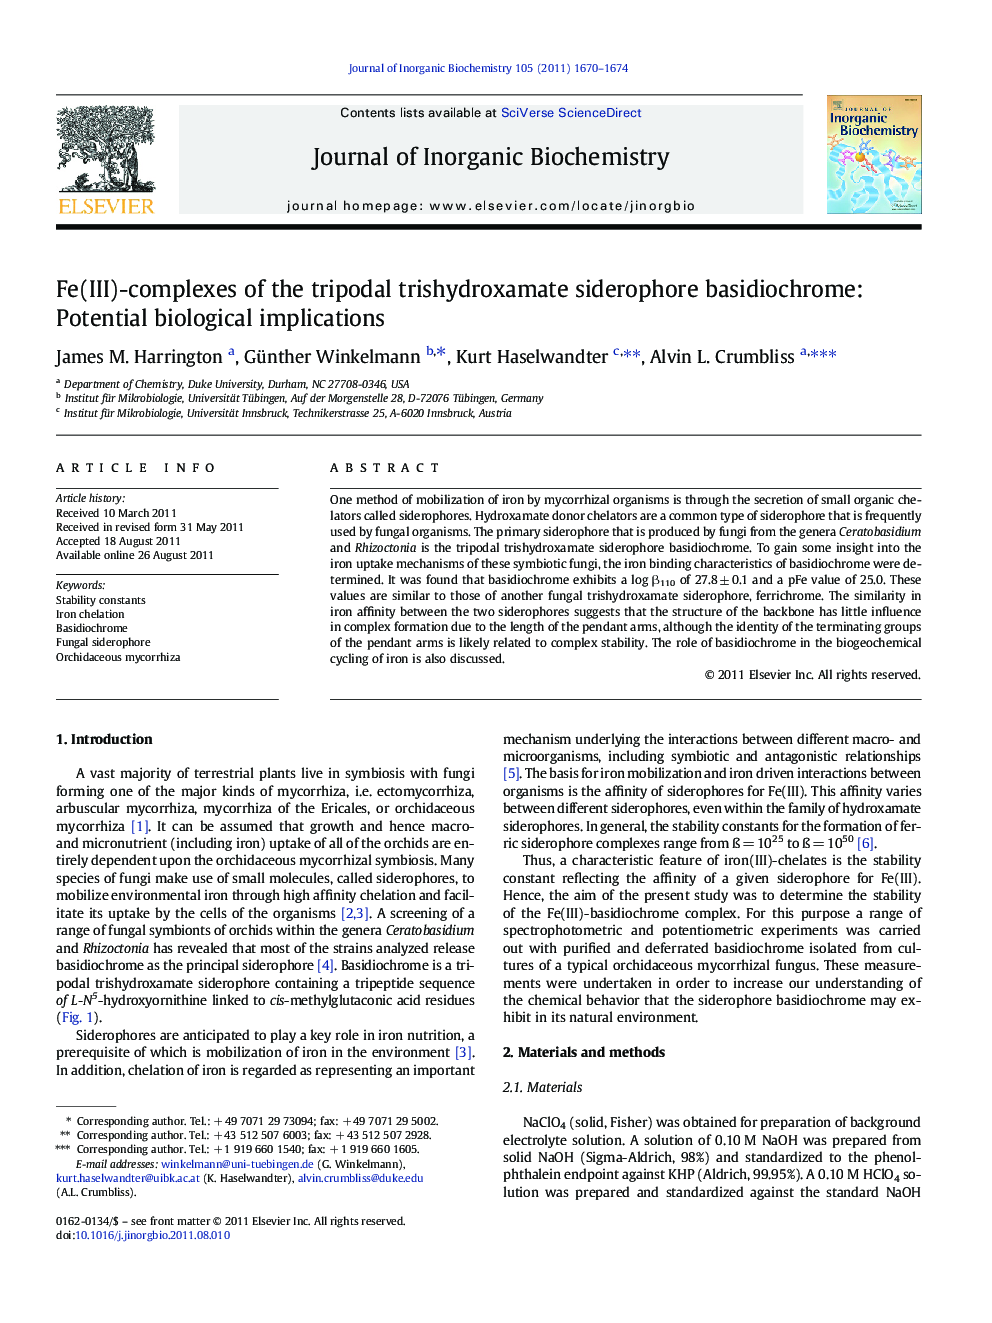 Fe(III)-complexes of the tripodal trishydroxamate siderophore basidiochrome: Potential biological implications